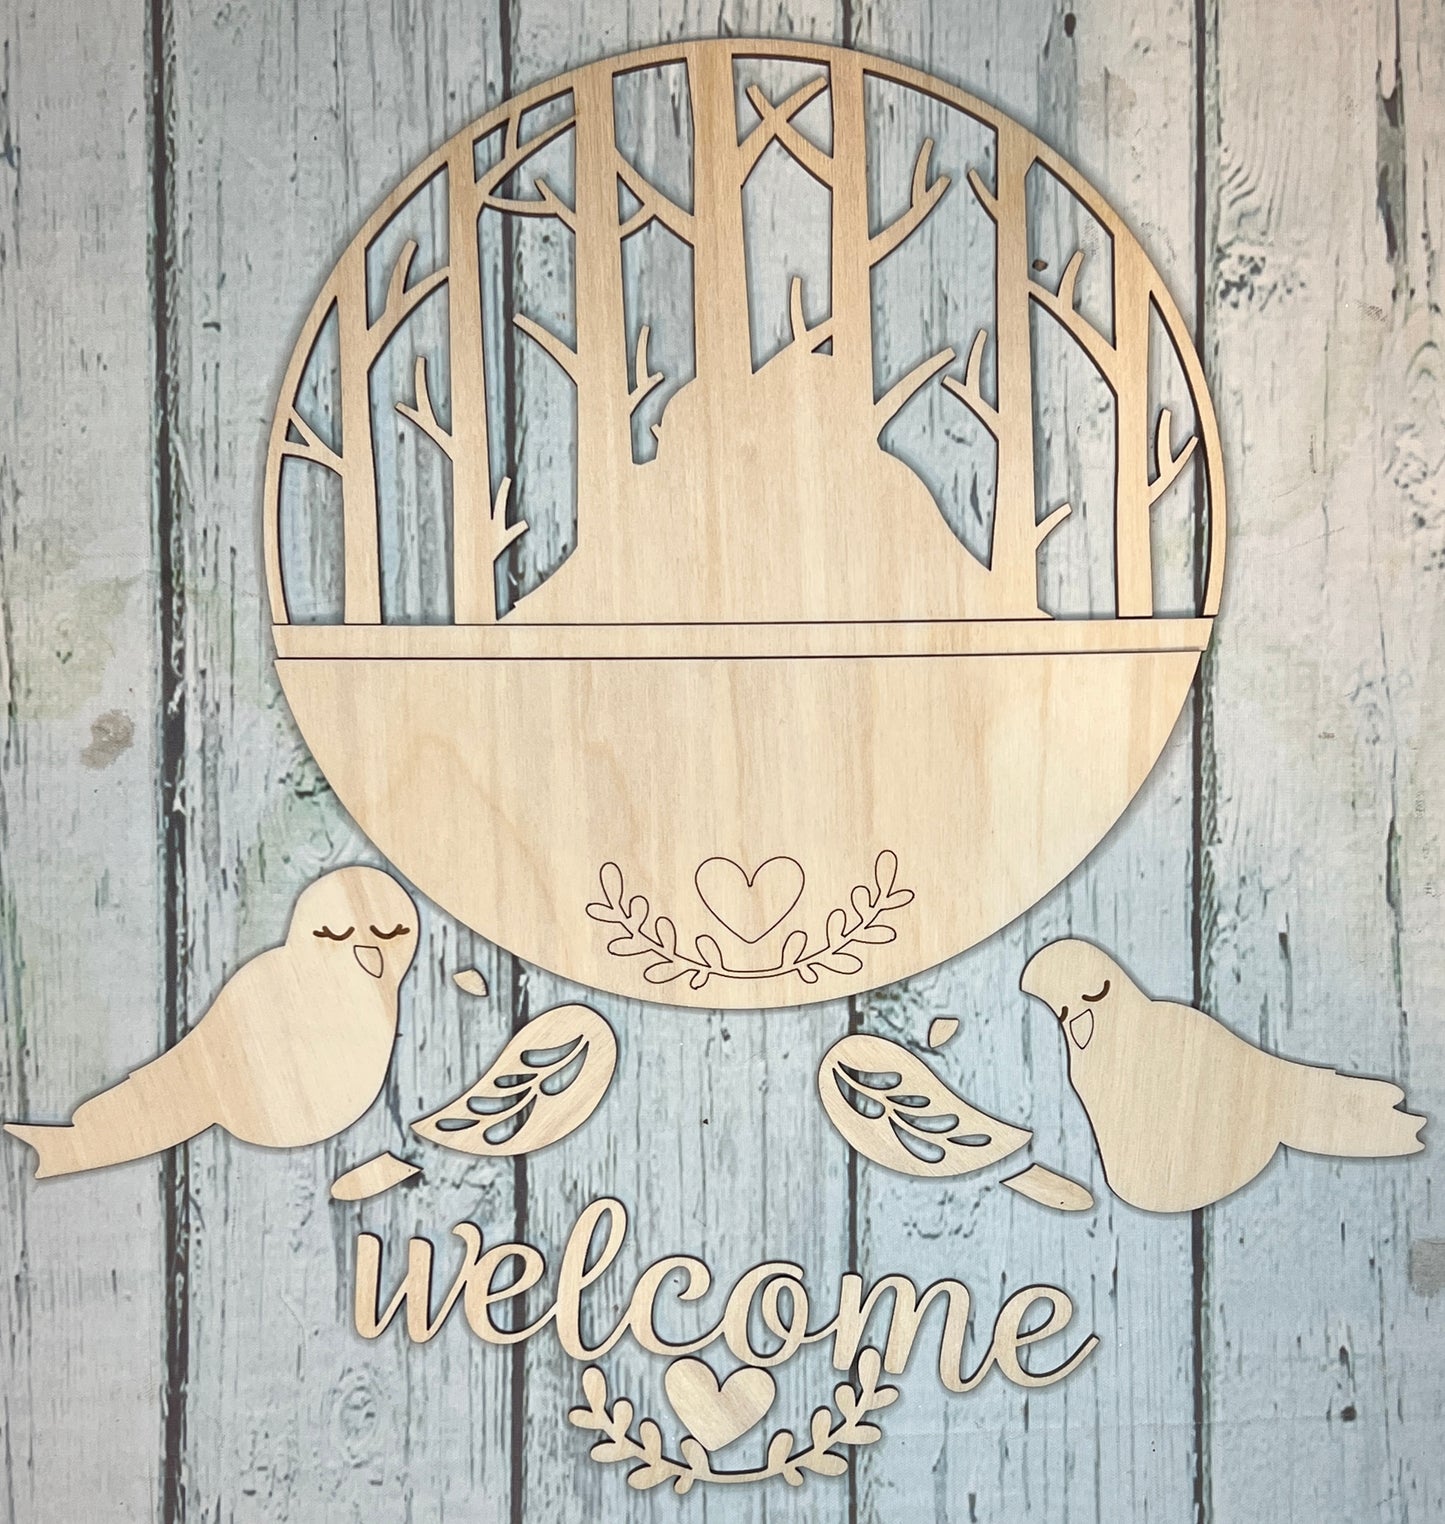 Welcome - Lovebirds - DIY Wood Blank Sign